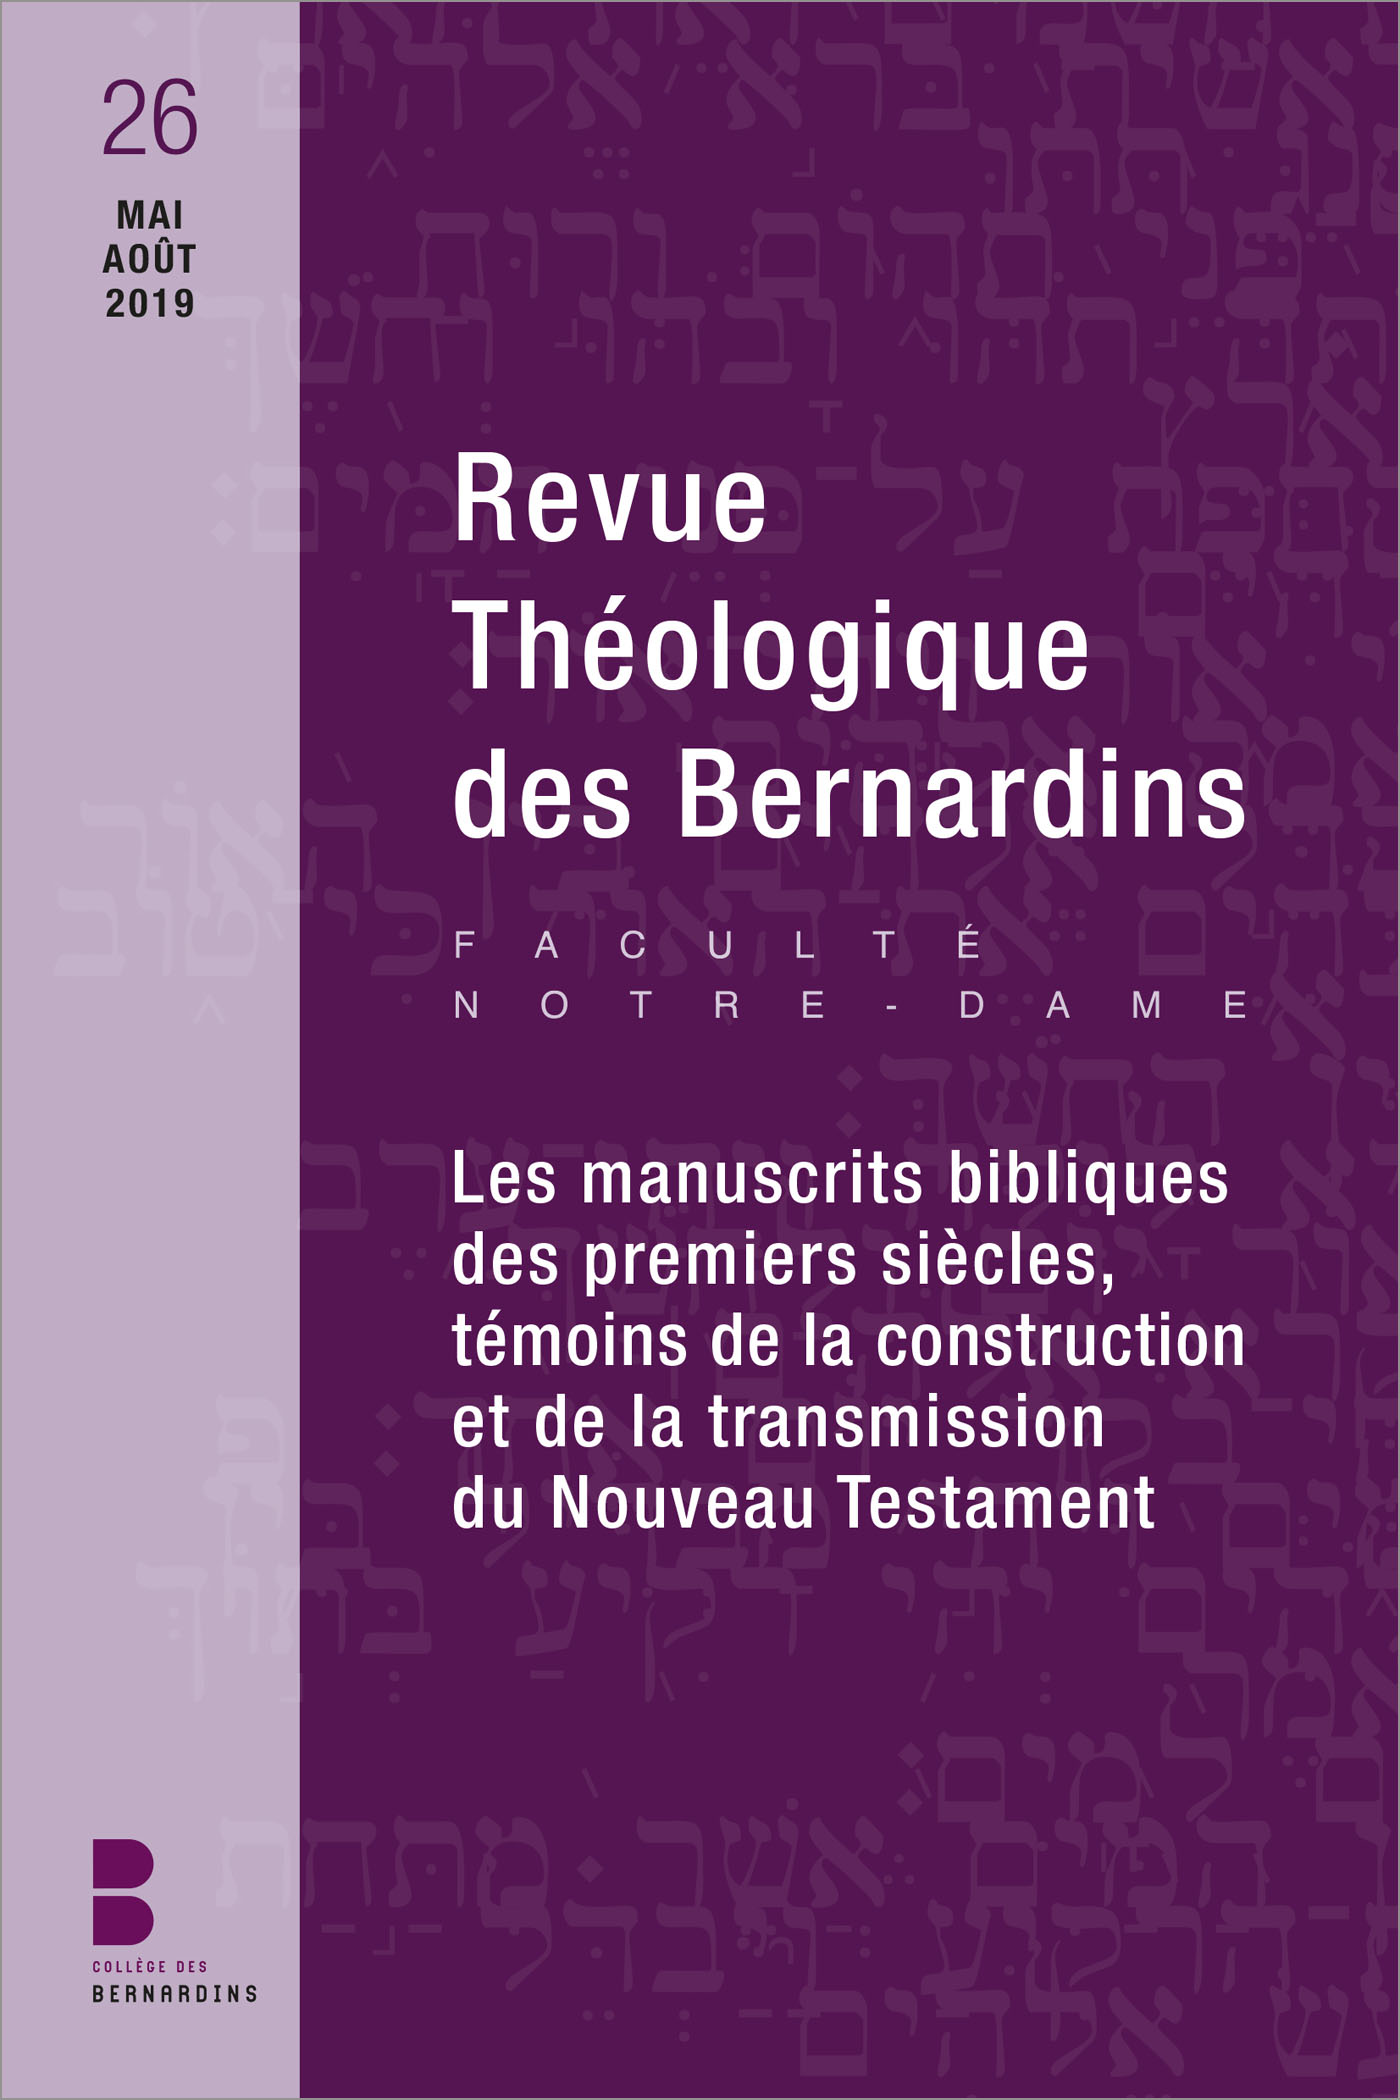 Revue Théologique des Bernardins n°26